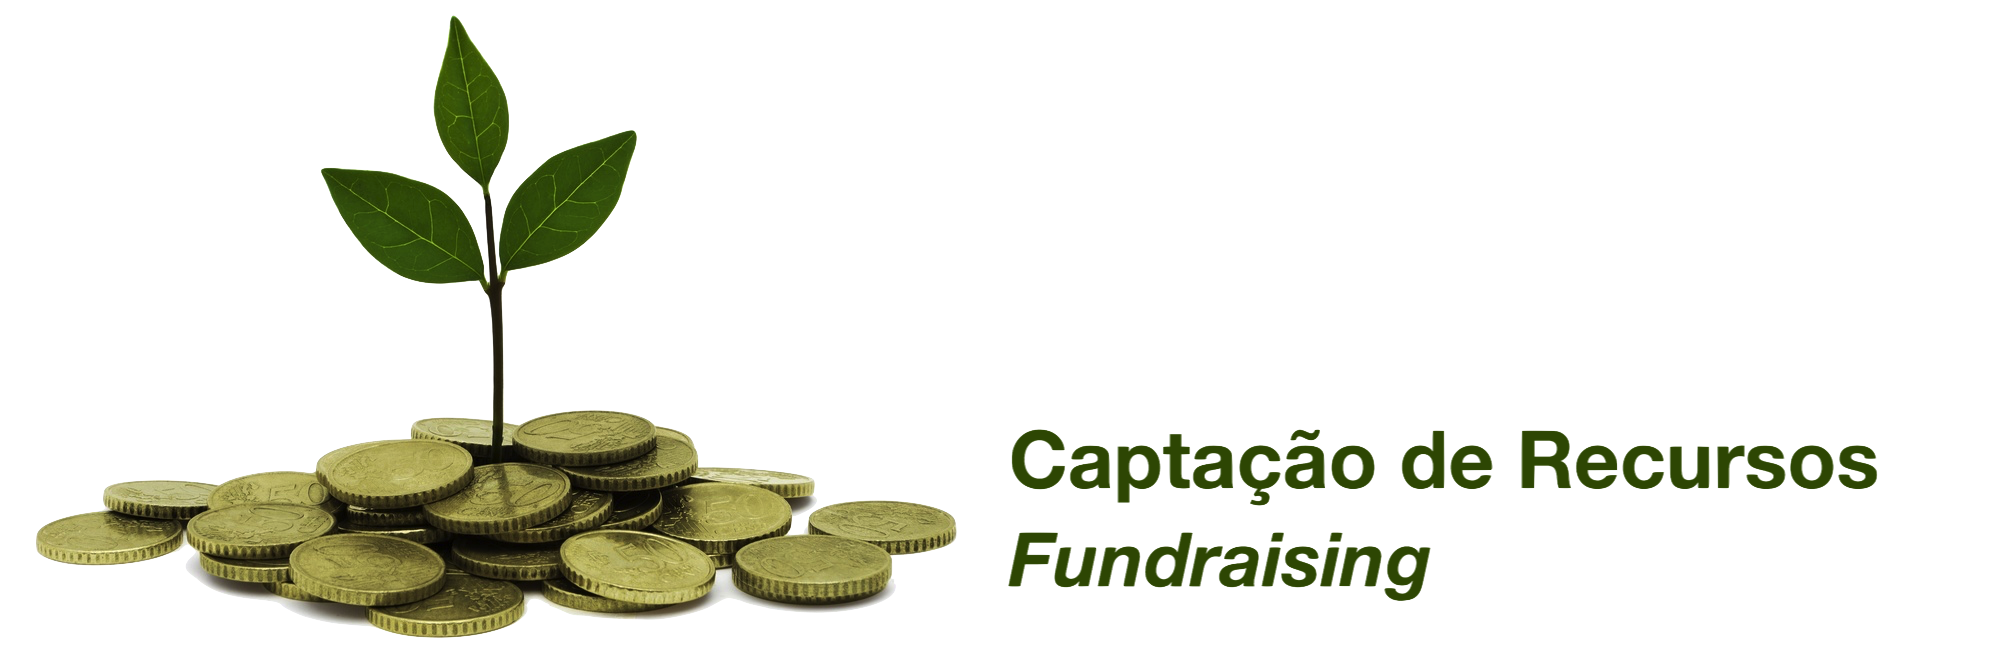 logo fundraising